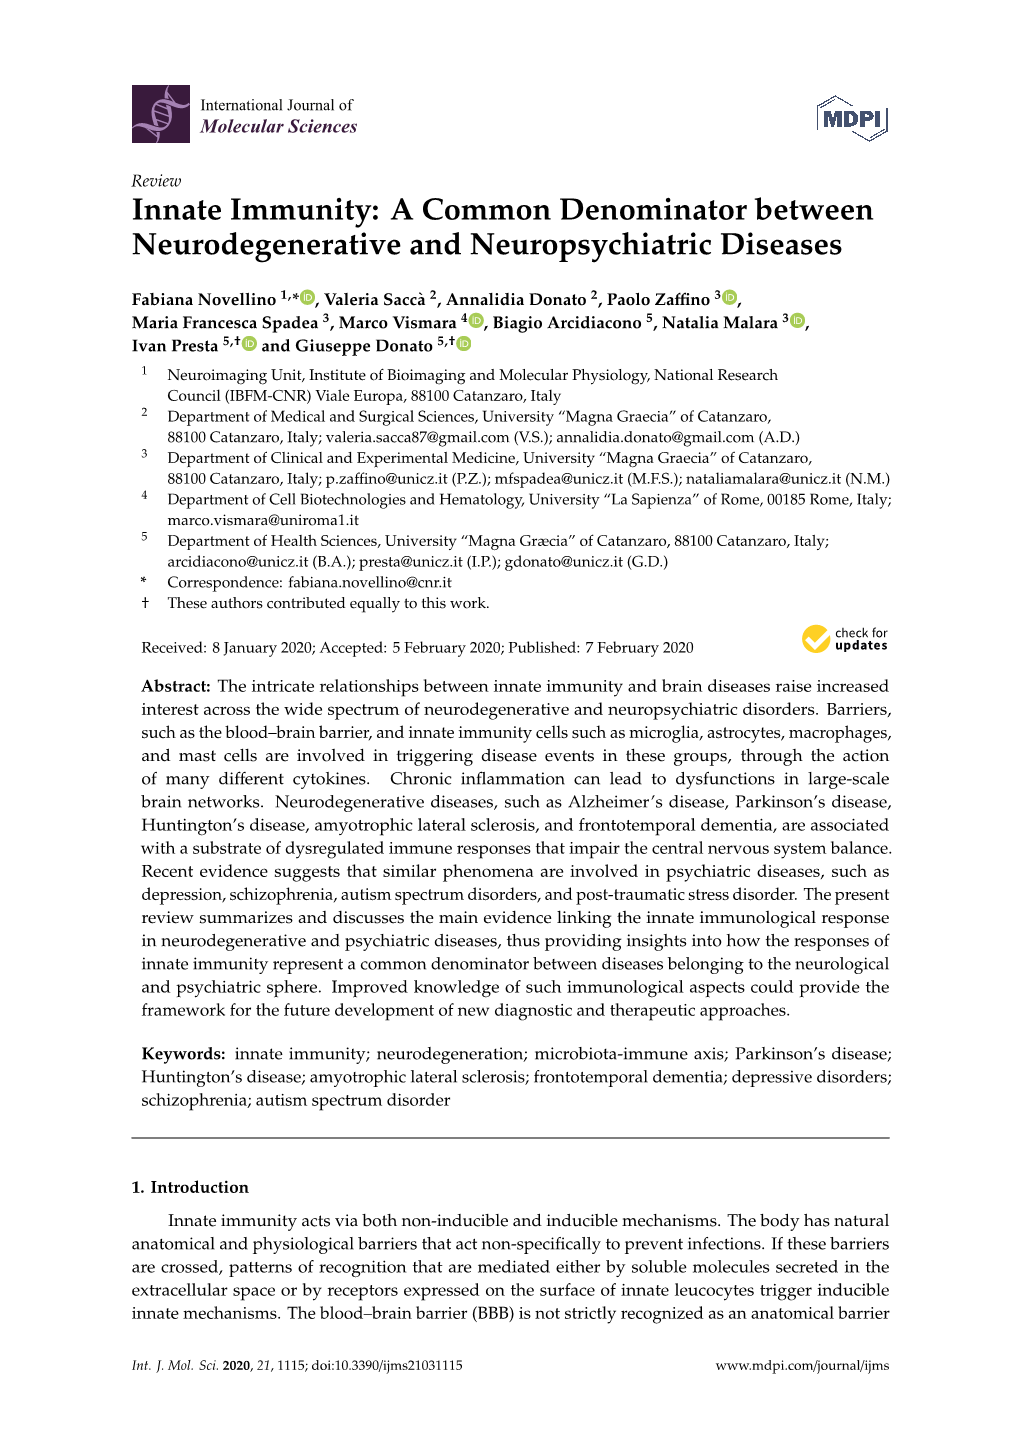 Innate Immunity: a Common Denominator Between Neurodegenerative and Neuropsychiatric Diseases